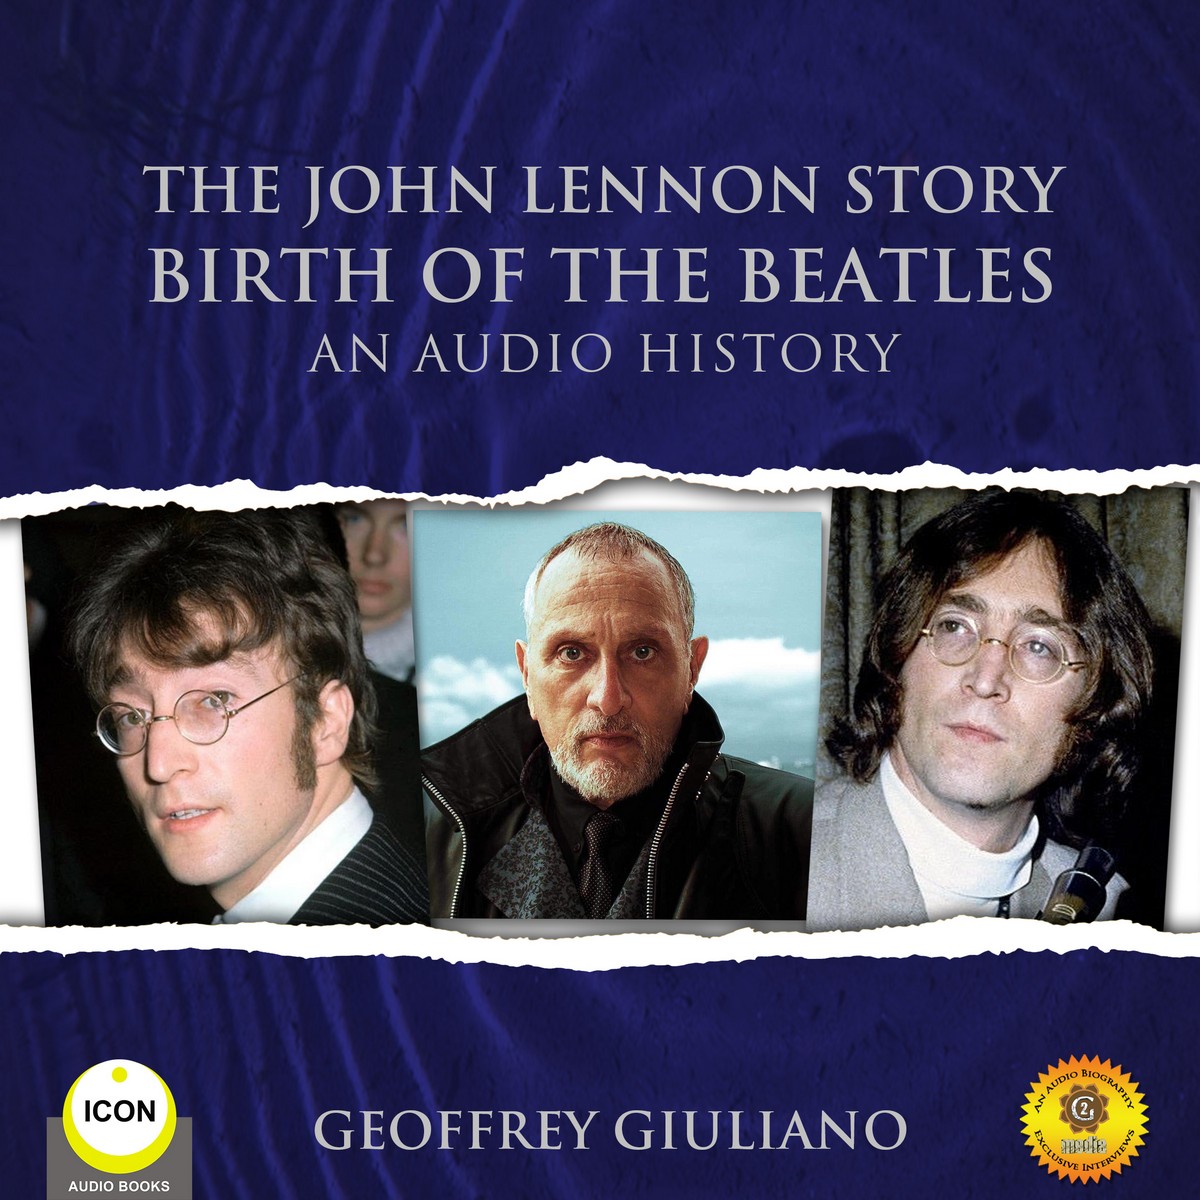 The John Lennon Story Birth of the Beatles – An Audio History